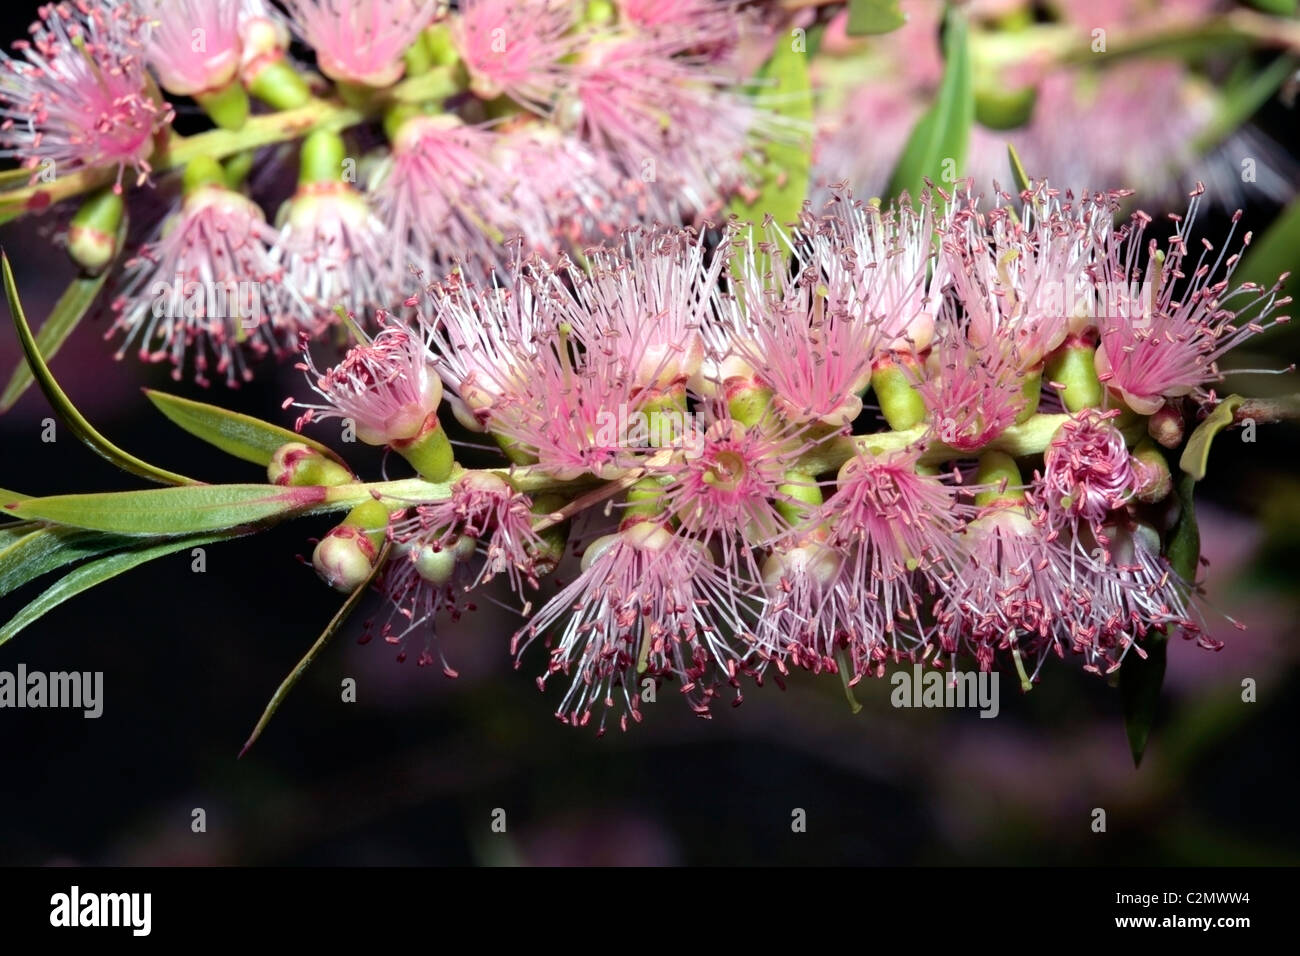 Honey-myrtle/Paperbark- Melaleuca flowers - Family Myrtaceae Stock Photo